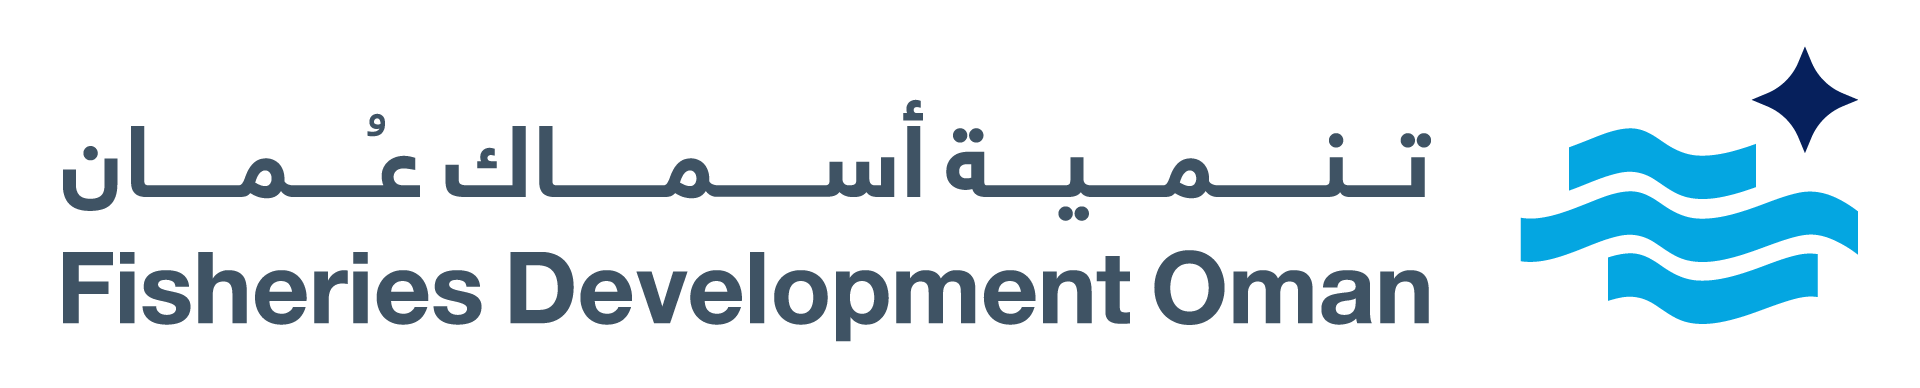 Fisheries Development Oman